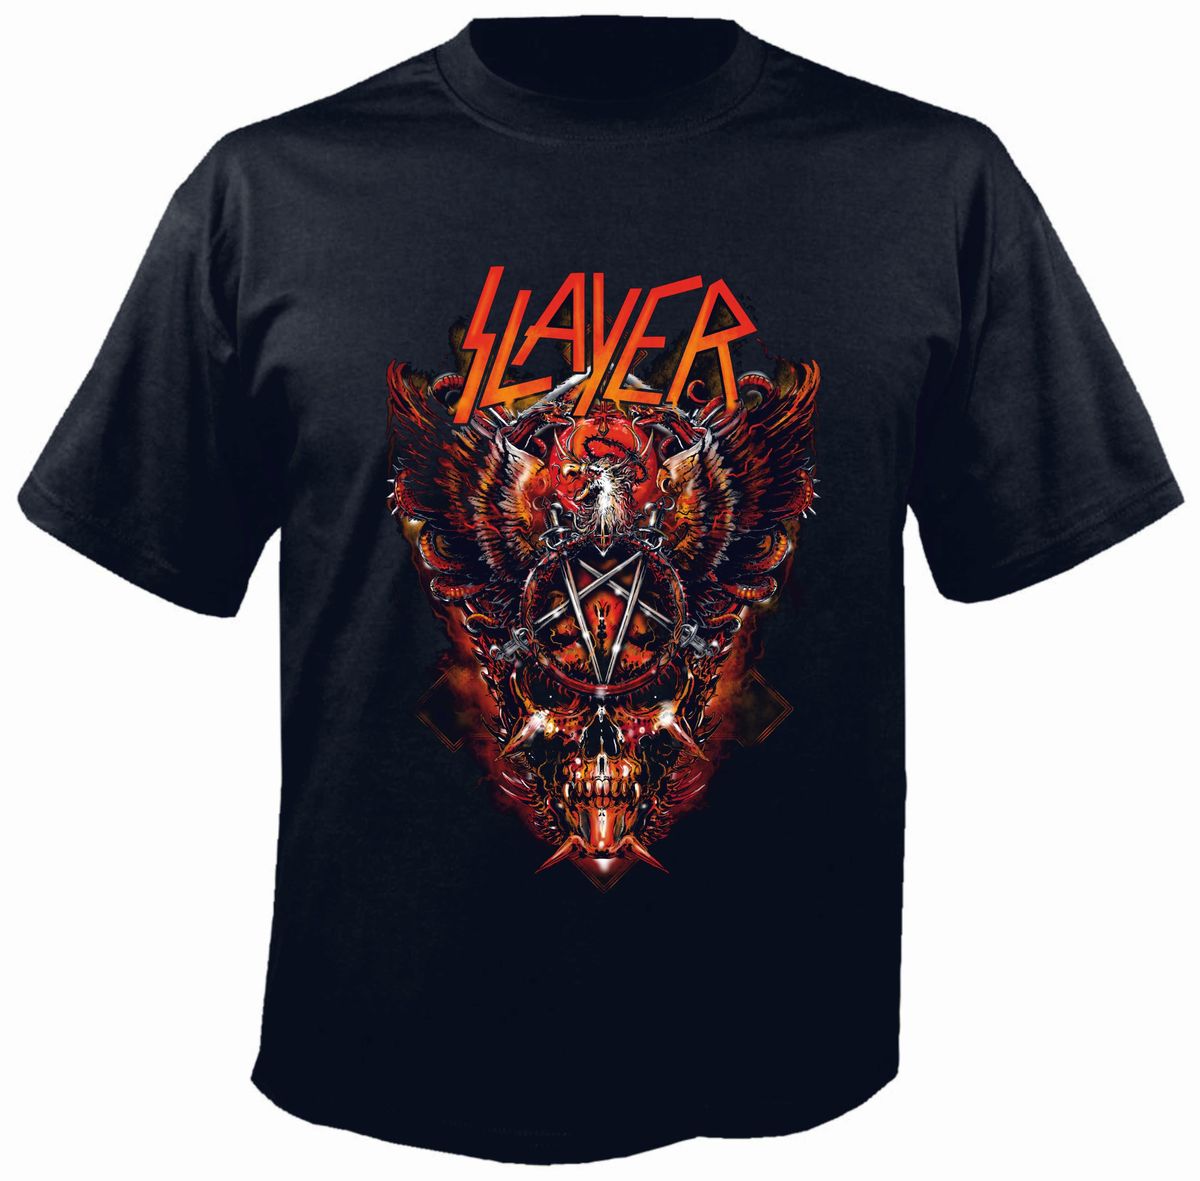 Slayer Band Black TShirt Metal & Rock Tshirts and Accessories